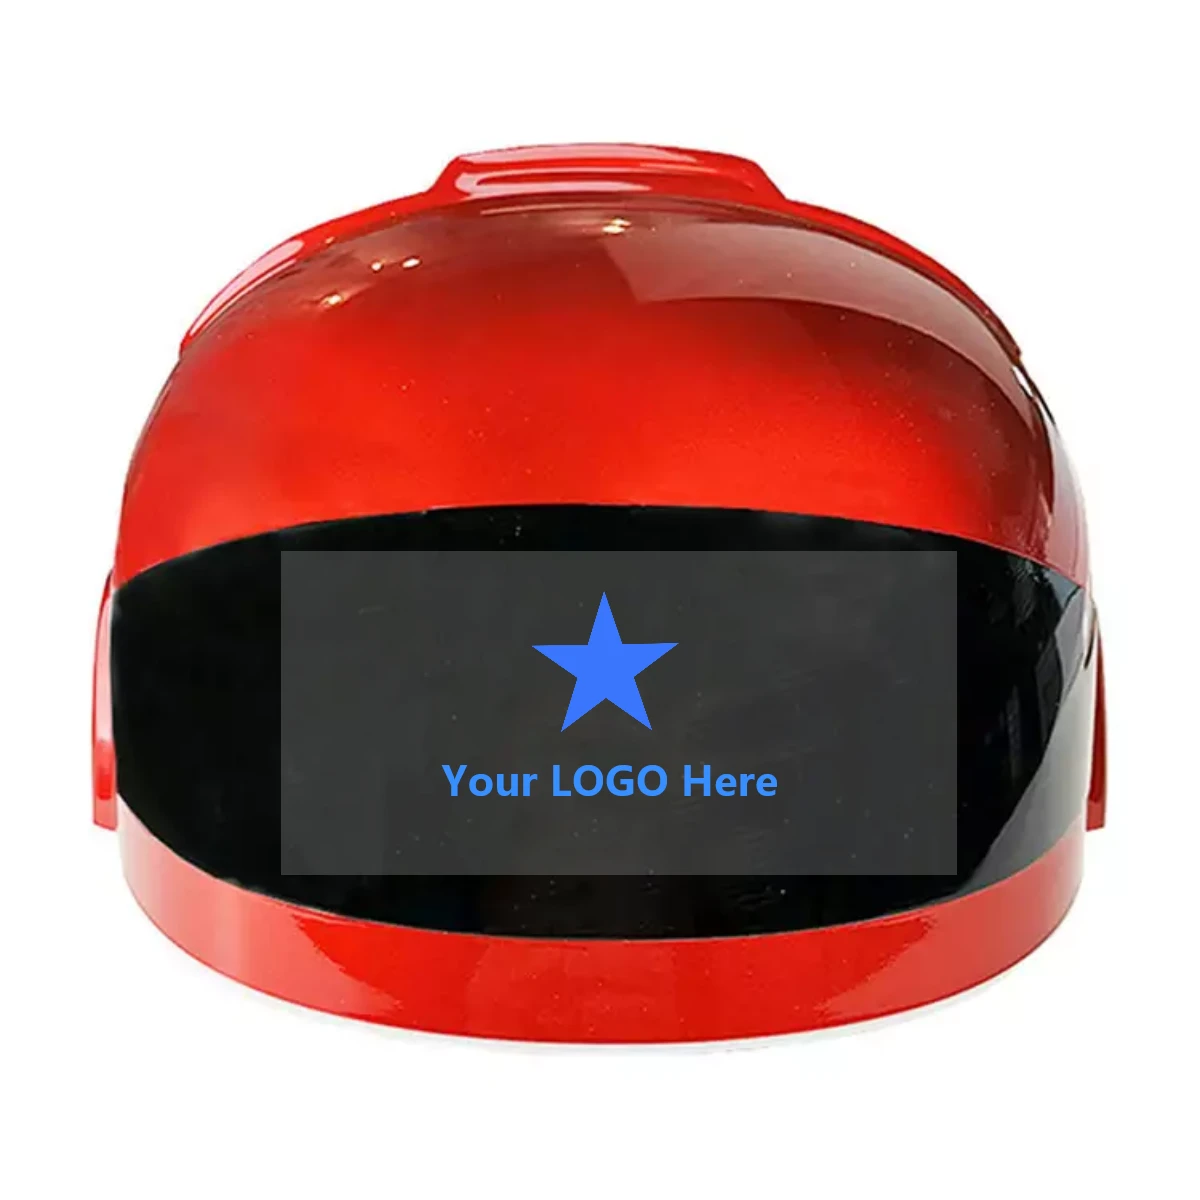 Helmet hair growth instrument with laser&amp;red led light for hair care hair growth laser cap